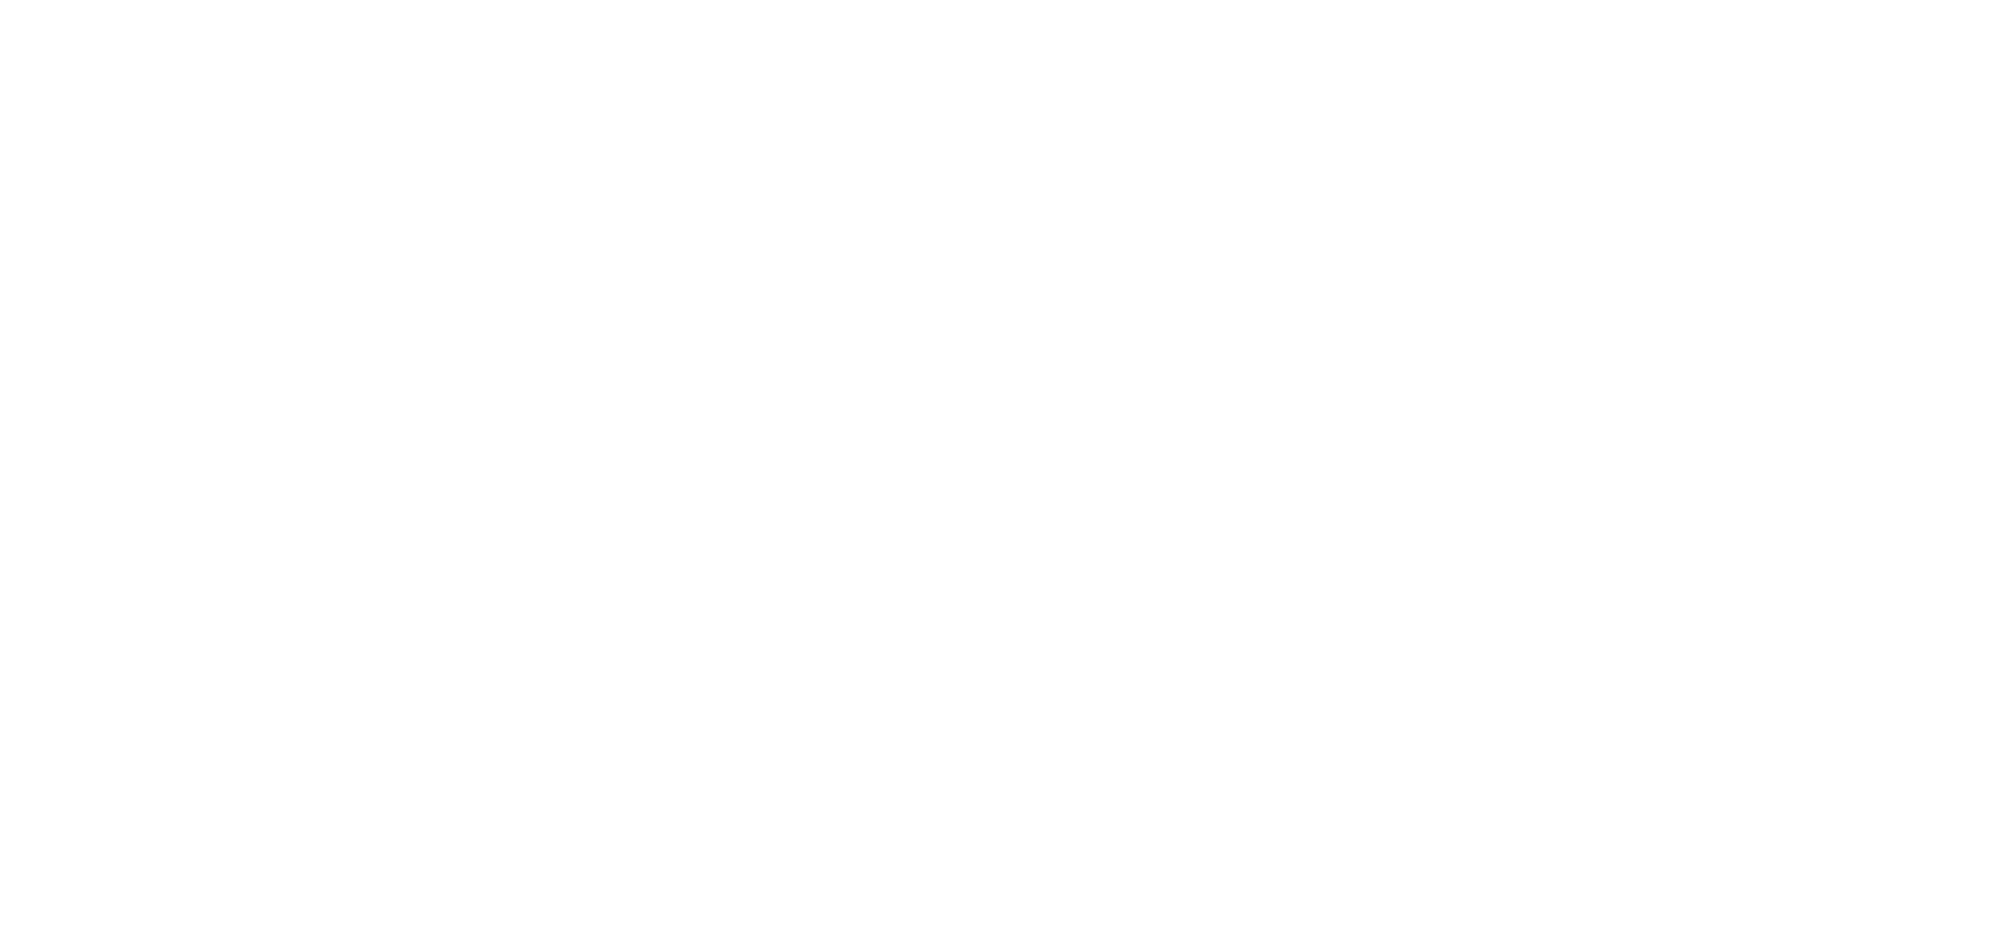 Filmproduktion Bern - BOFF. - Logo Reformierte Kirchen Bern-Jura-Solothurn